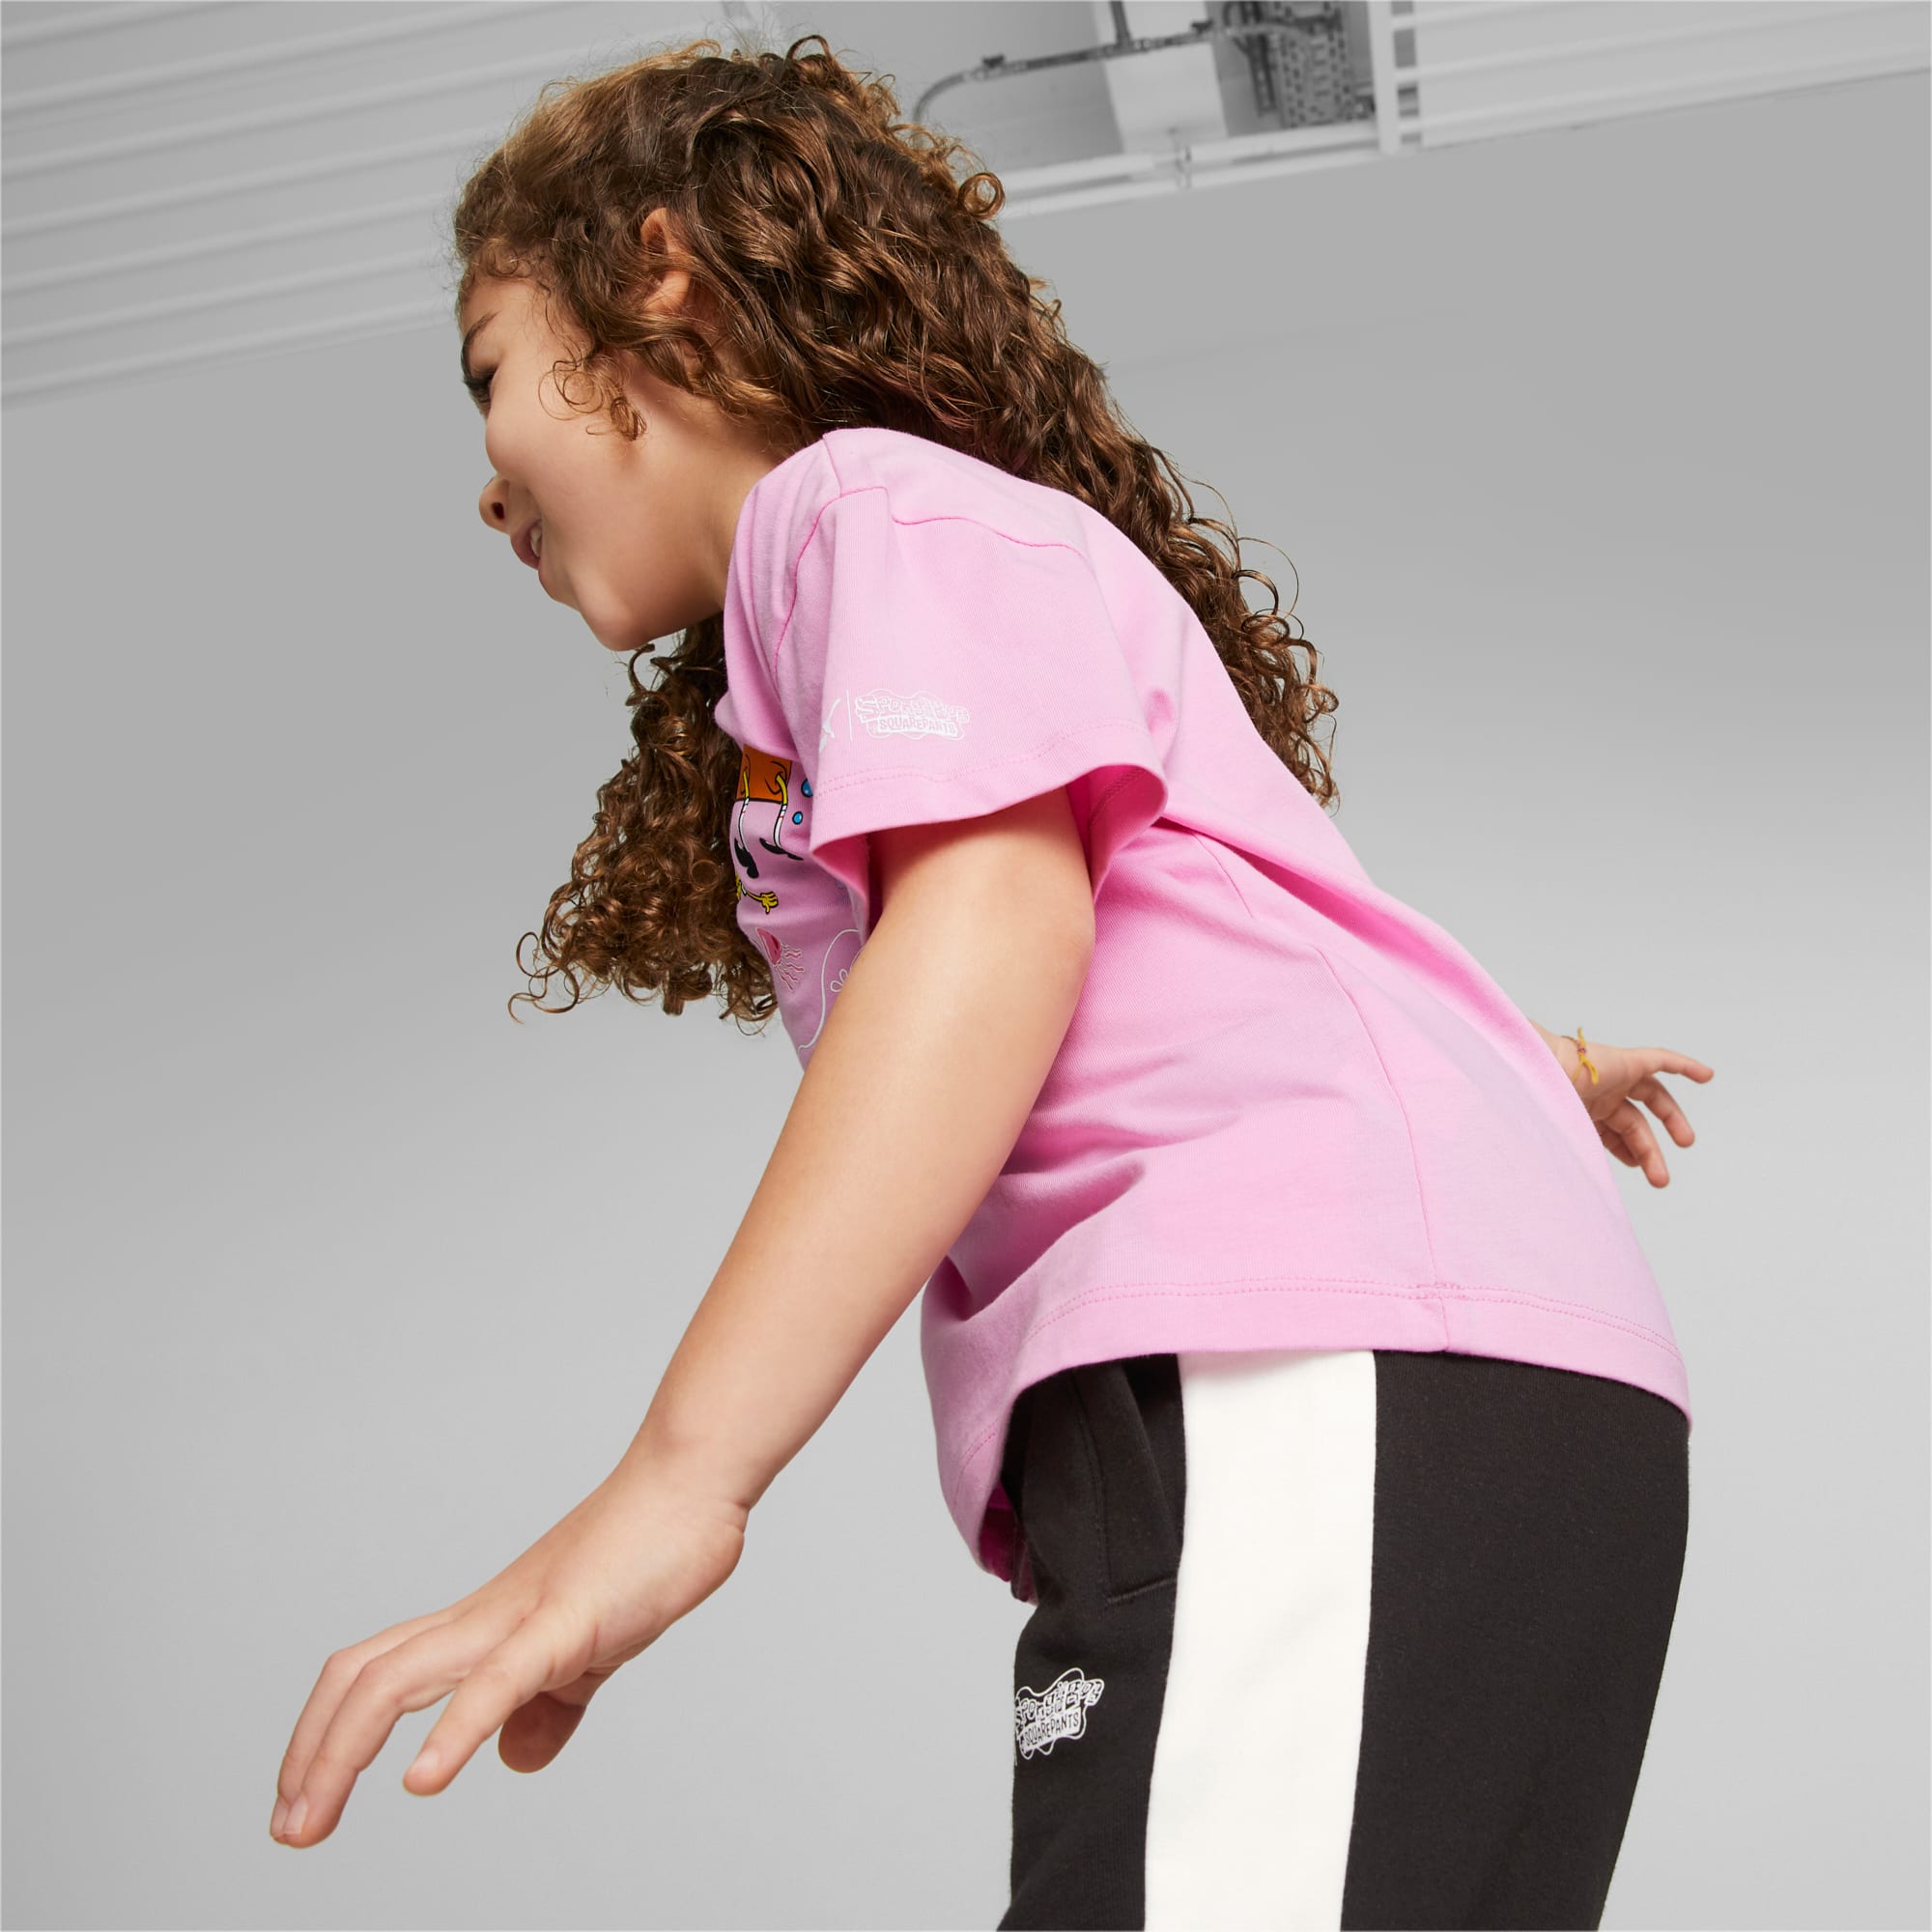 PUMA X SPONGEBOB T-Shirt Kinder, Rosa, Größe: 110, Kleidung